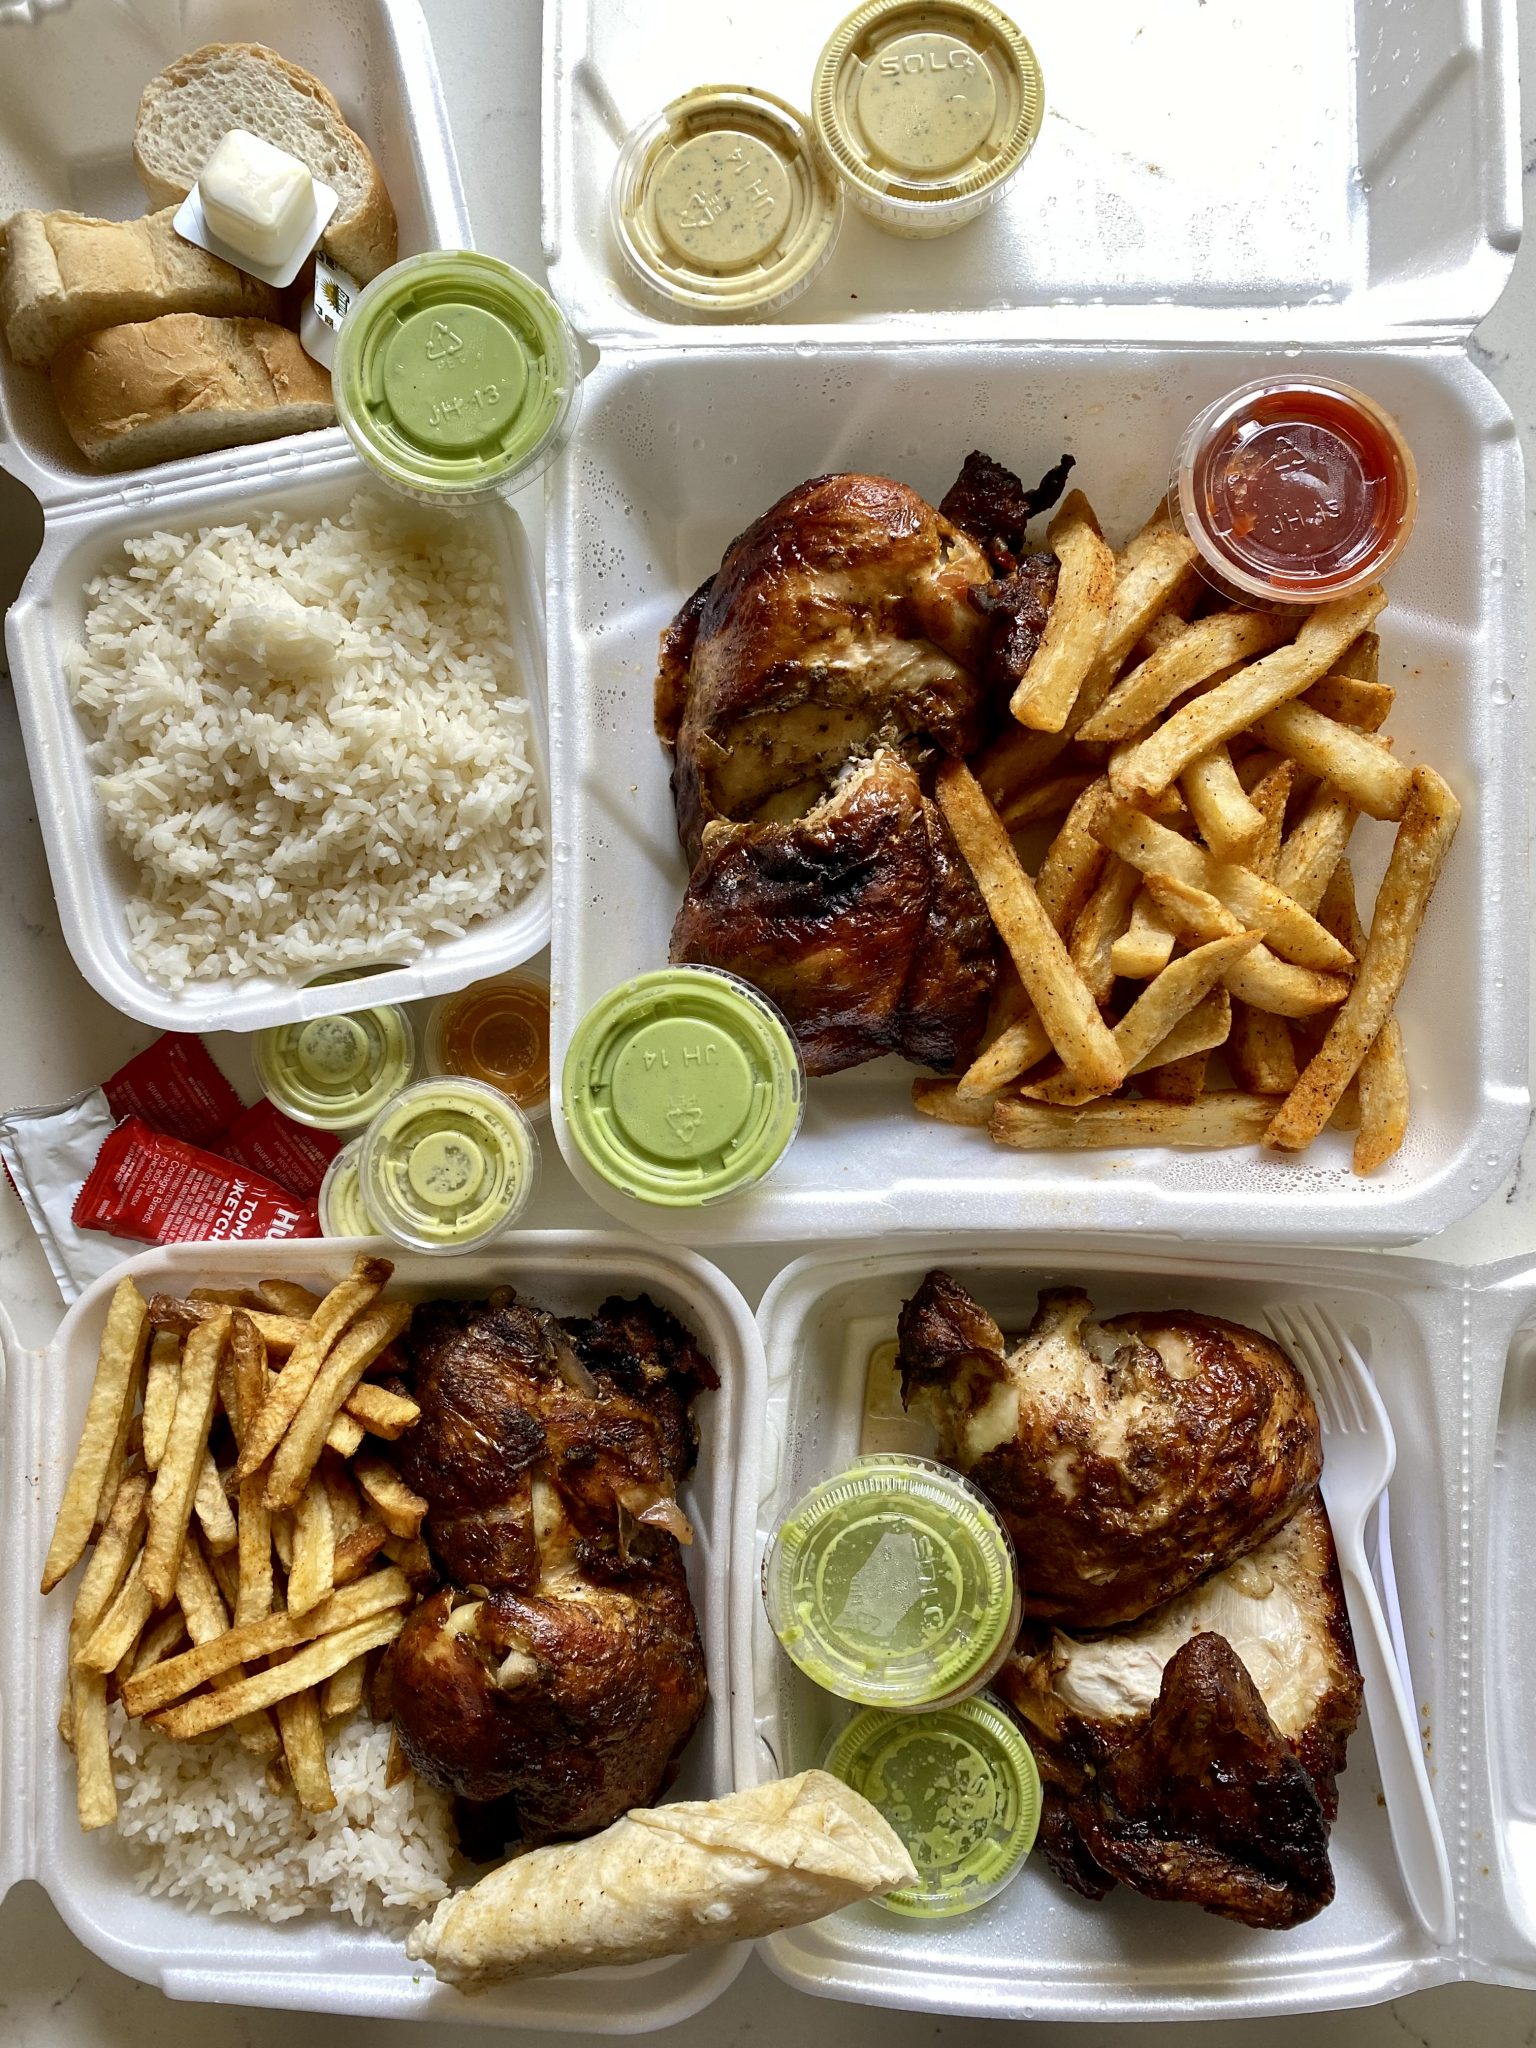 aji verdes van restaurants: pollo a la brasa, cavaman kitchen, pollos al brasero